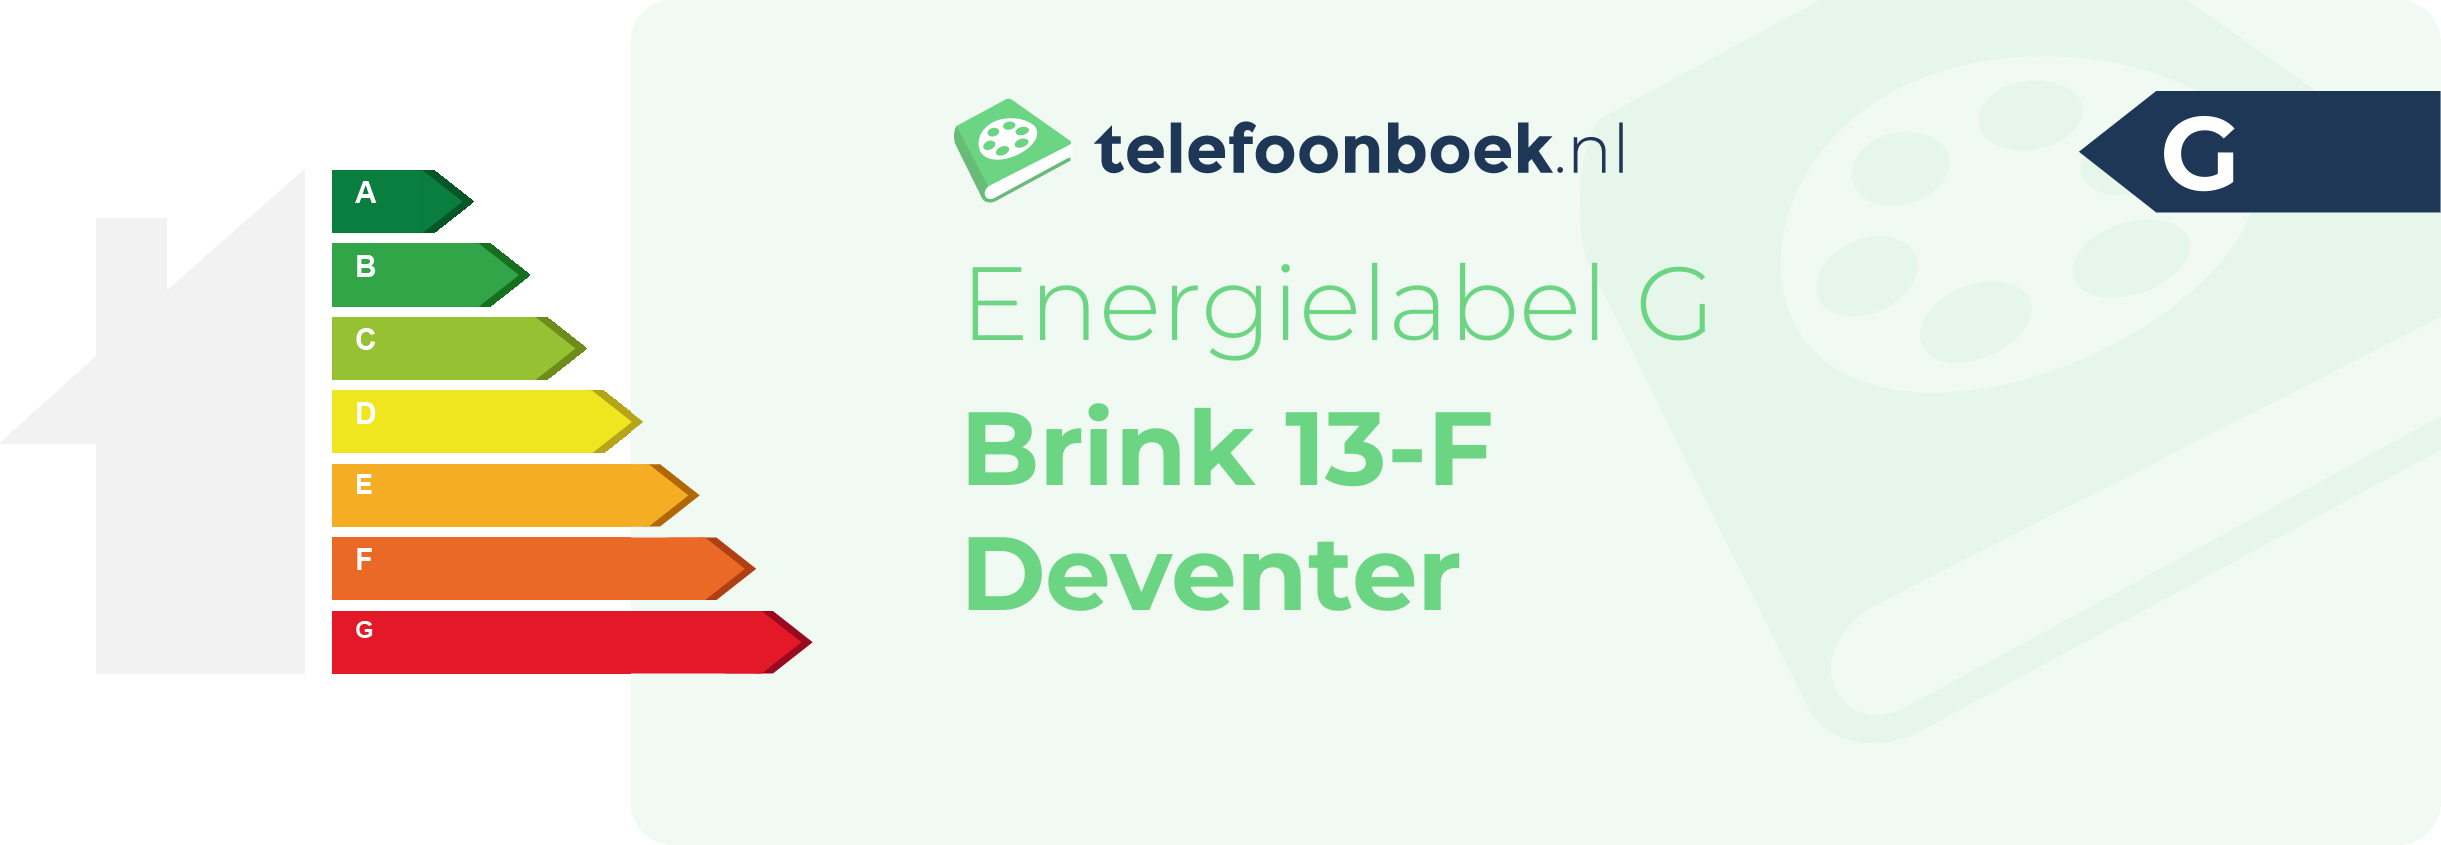 Energielabel Brink 13-F Deventer